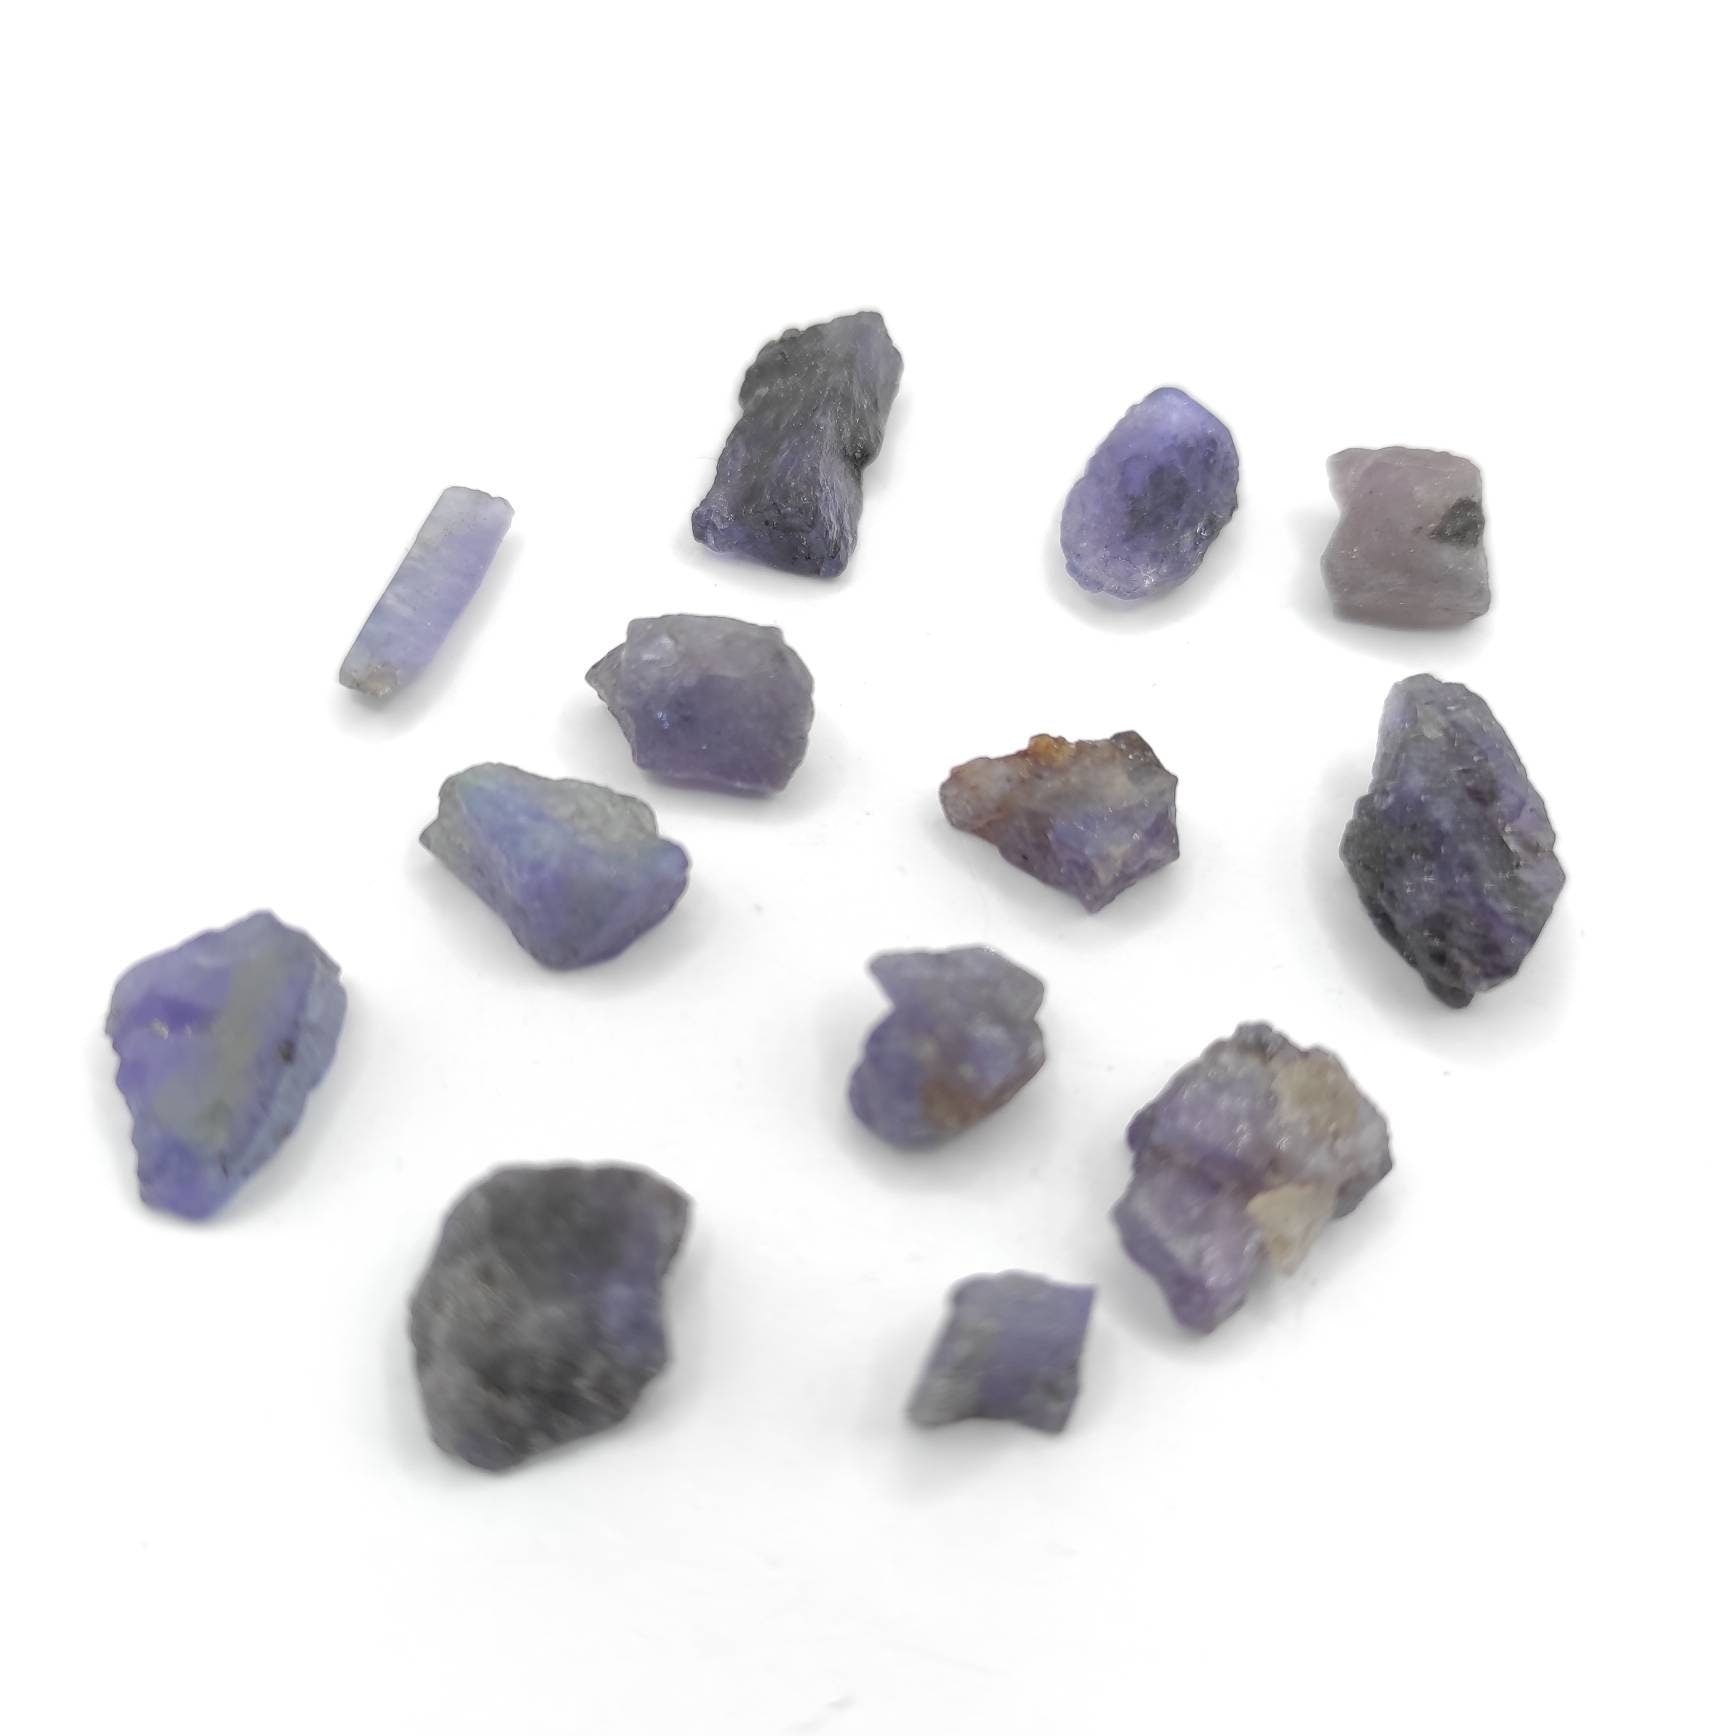 50ct Lot of 13pcs - Raw Tanzanite Gemstones - Rough Tanzanite Crystals - Heat Treated Tanzanite Loose Gems - Purple Tanzanite from Tanzania